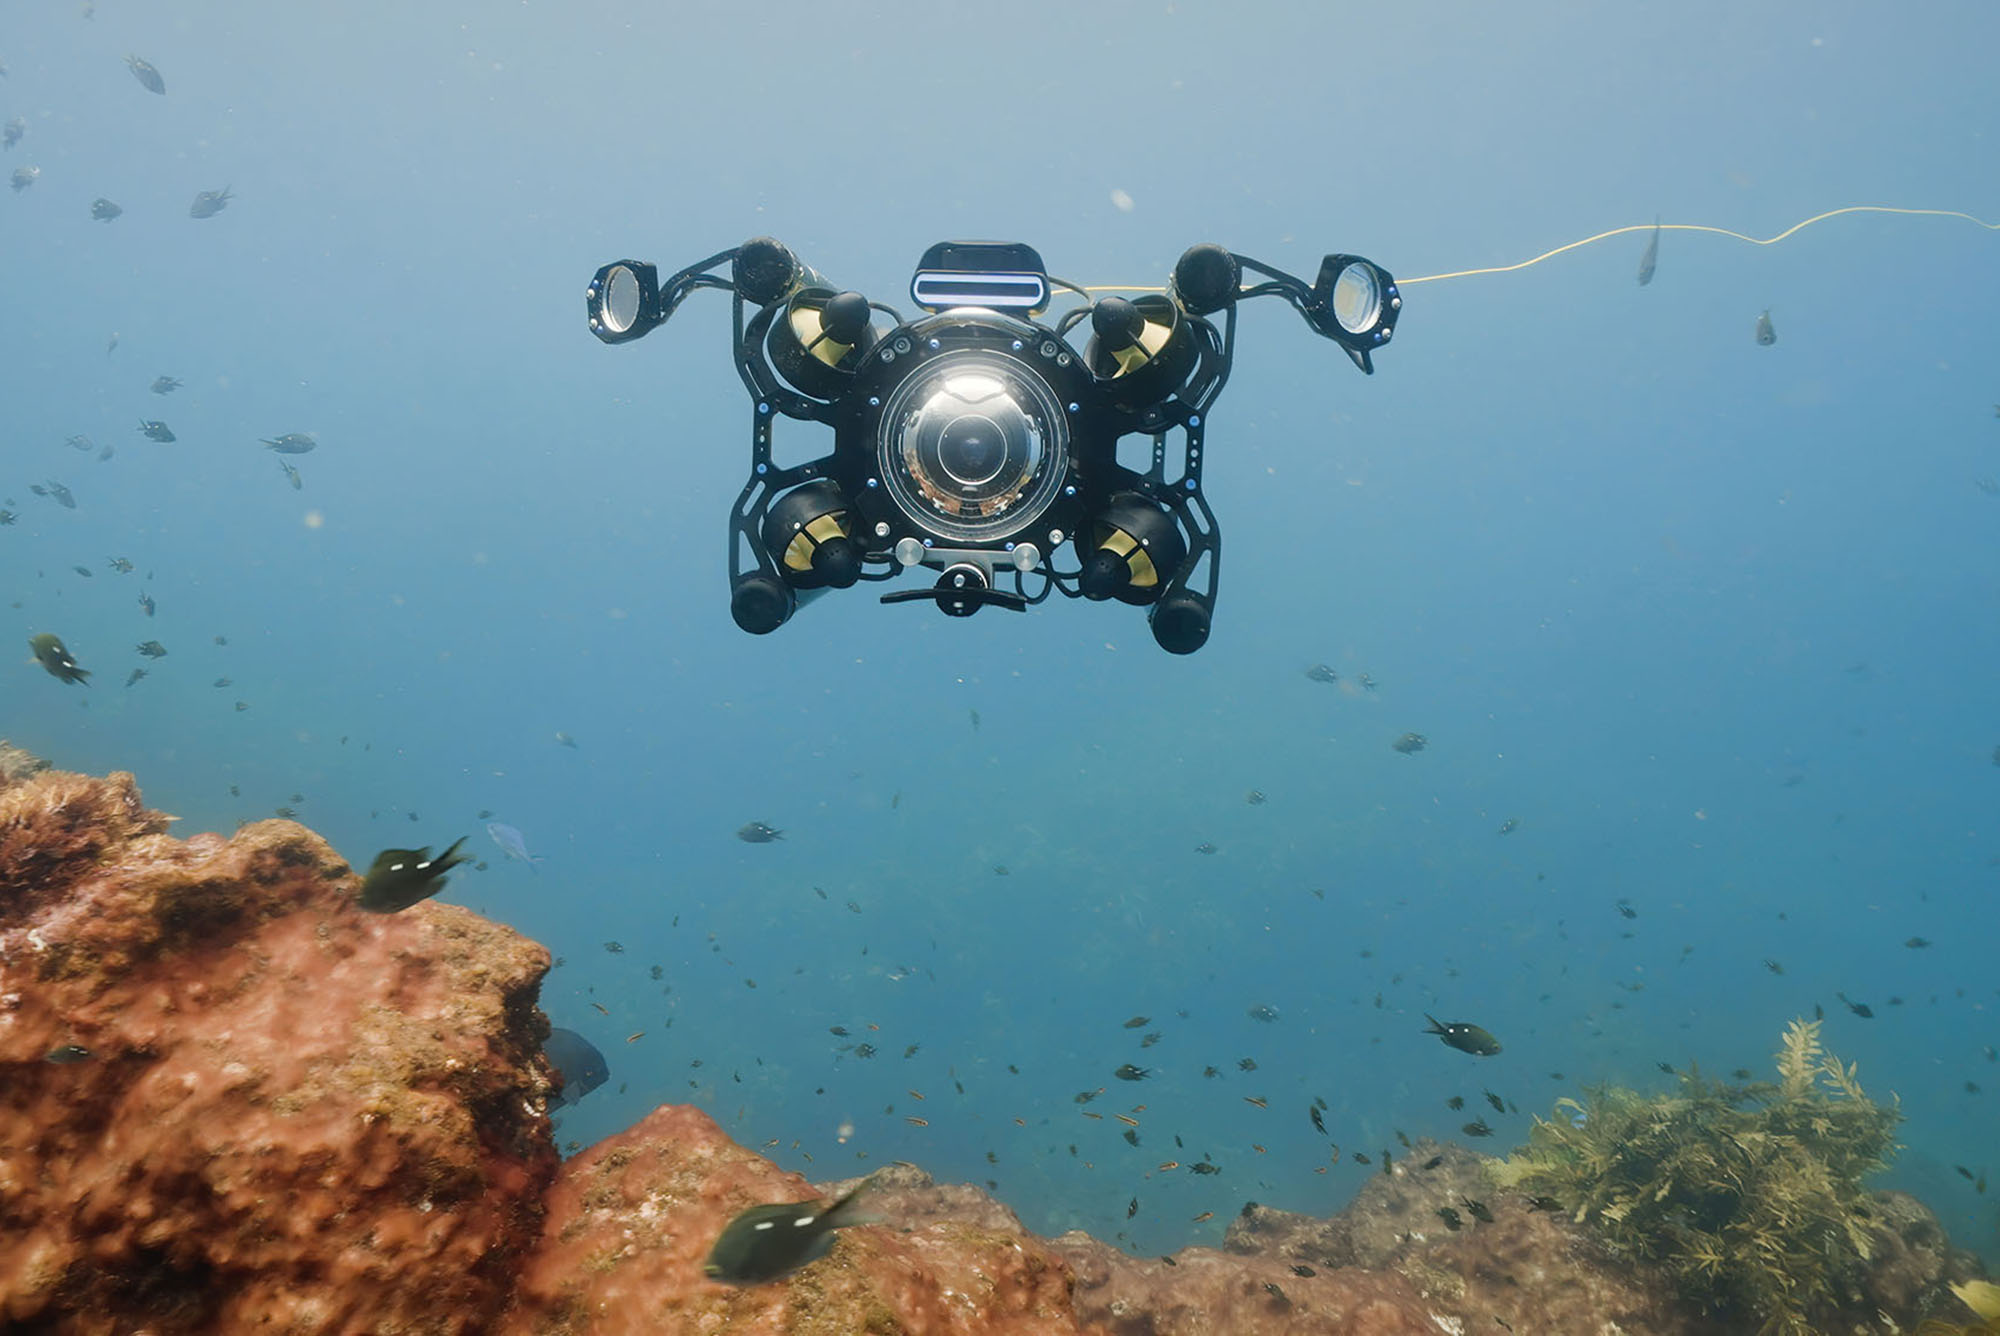 Boxfish ROV in action underwater